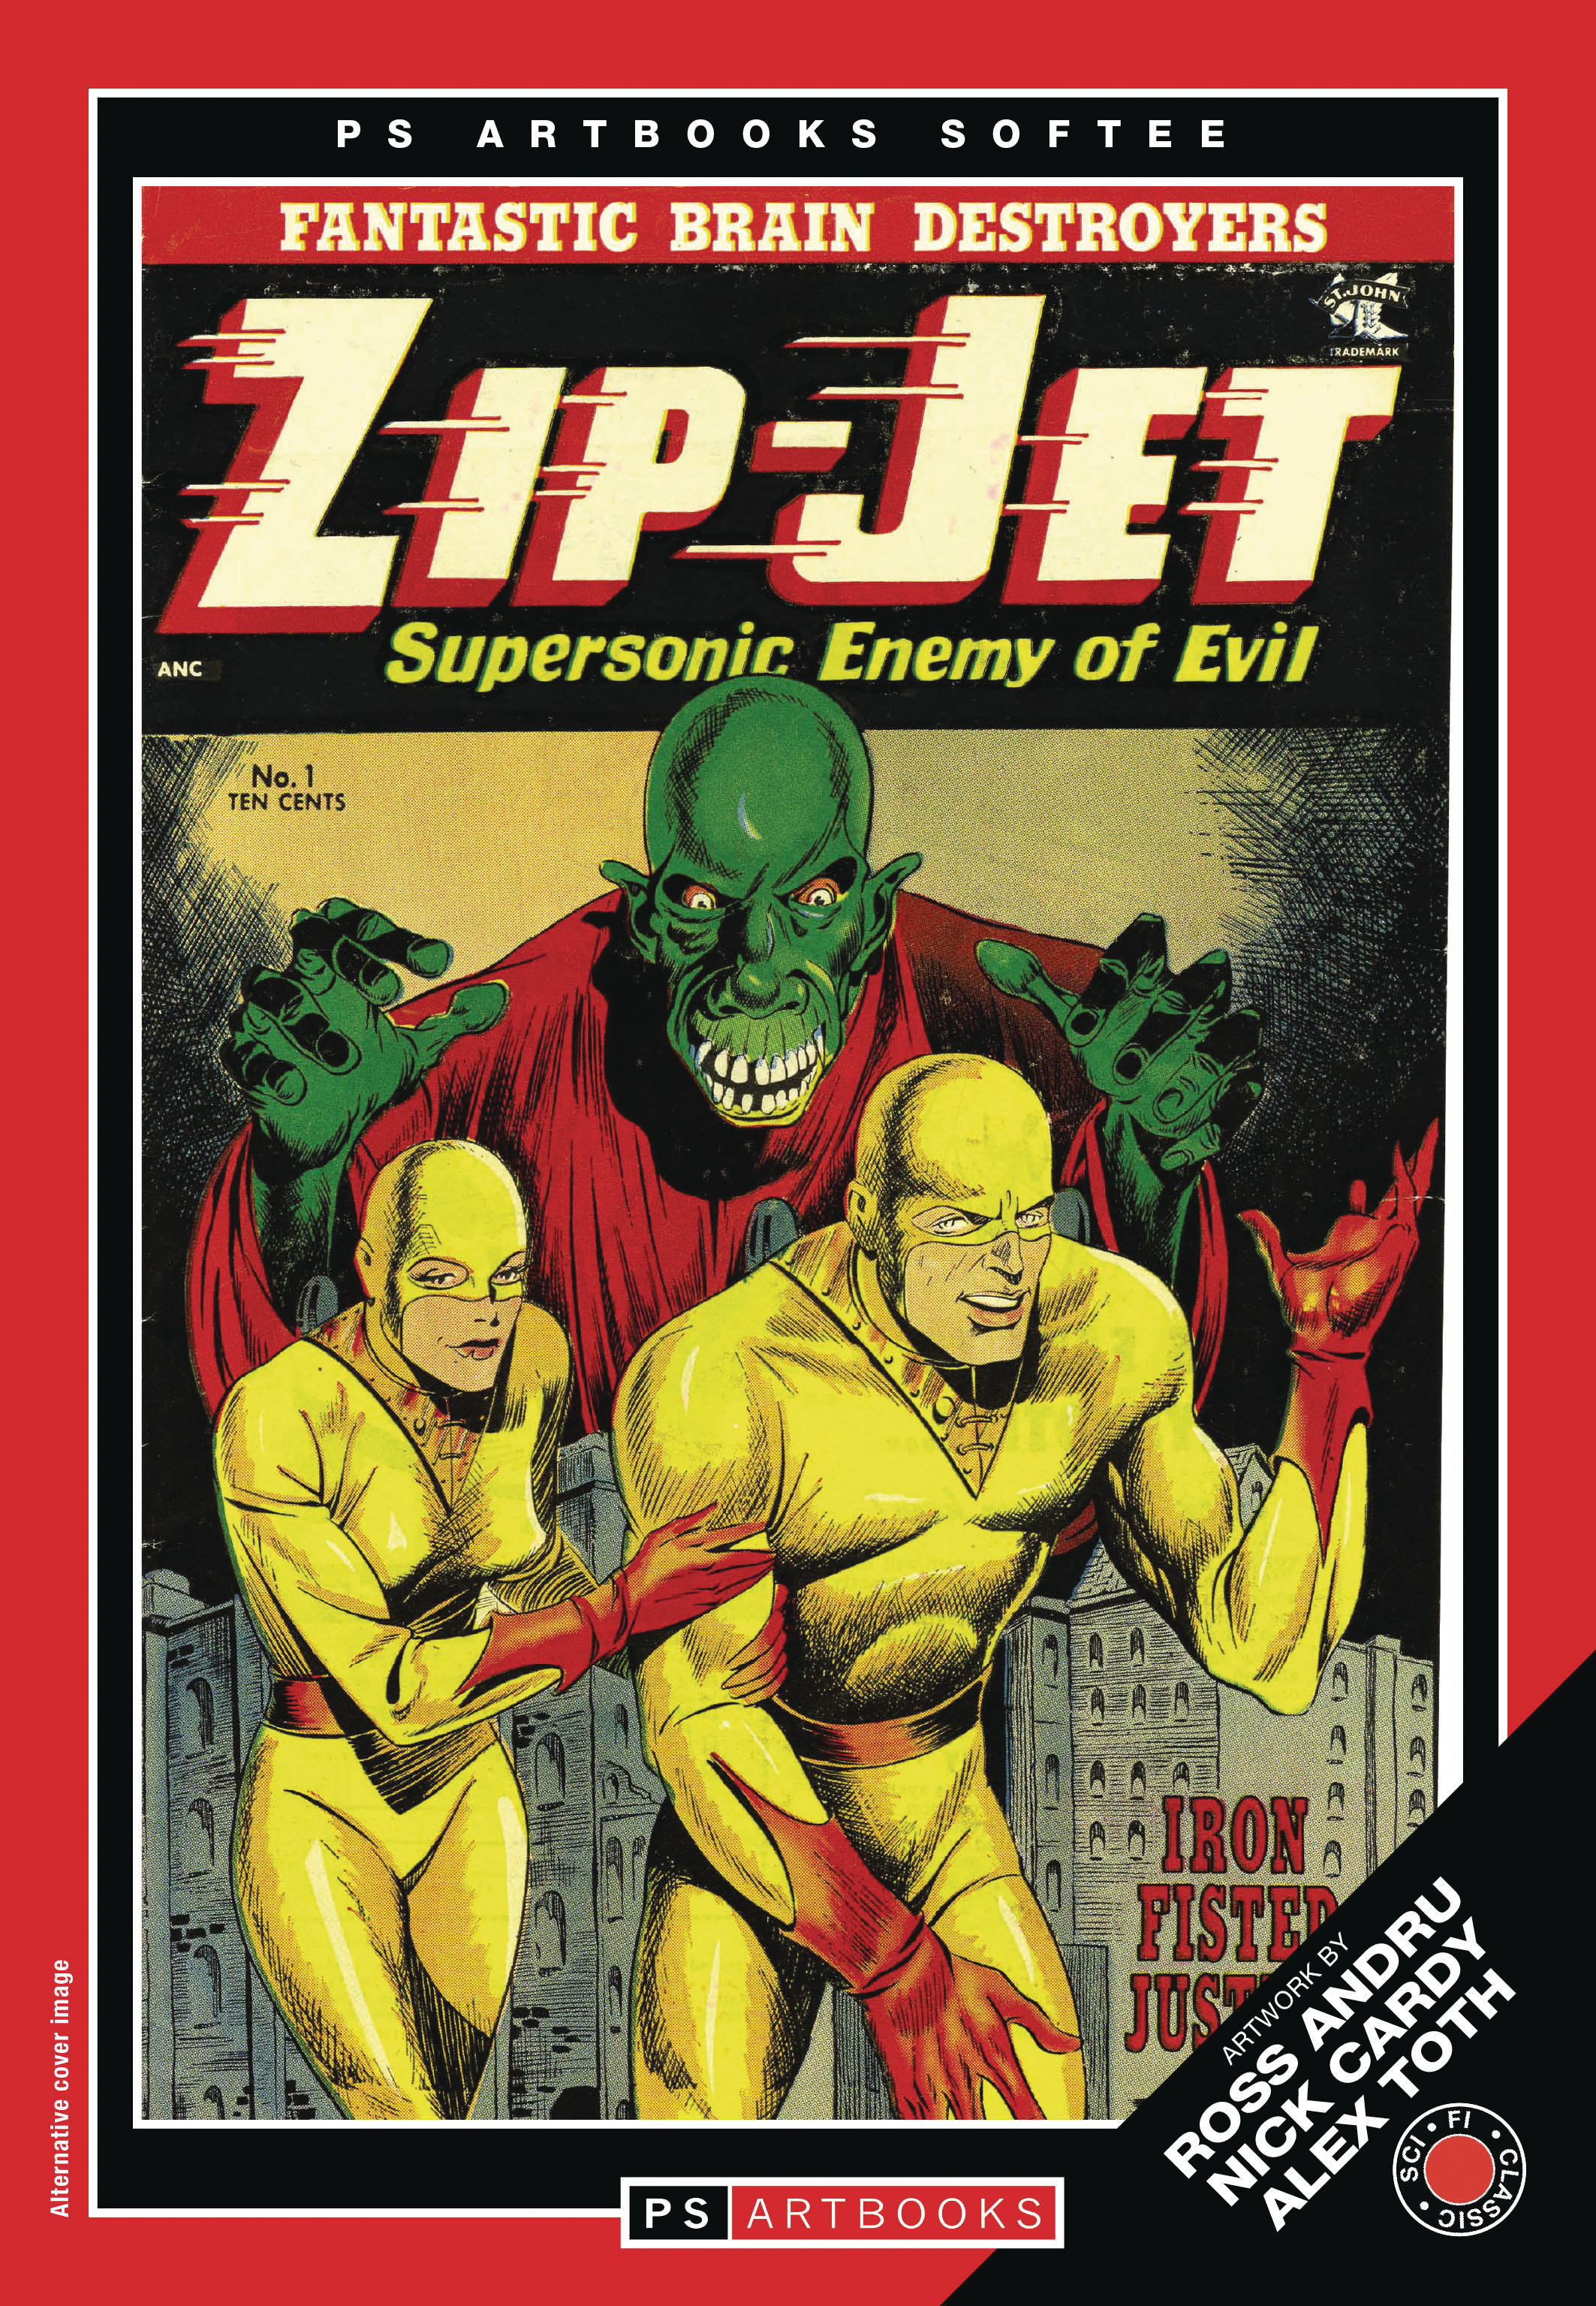 PS Artbooks Classic Sci Fi Comics Softee Graphic Novel Volume 4